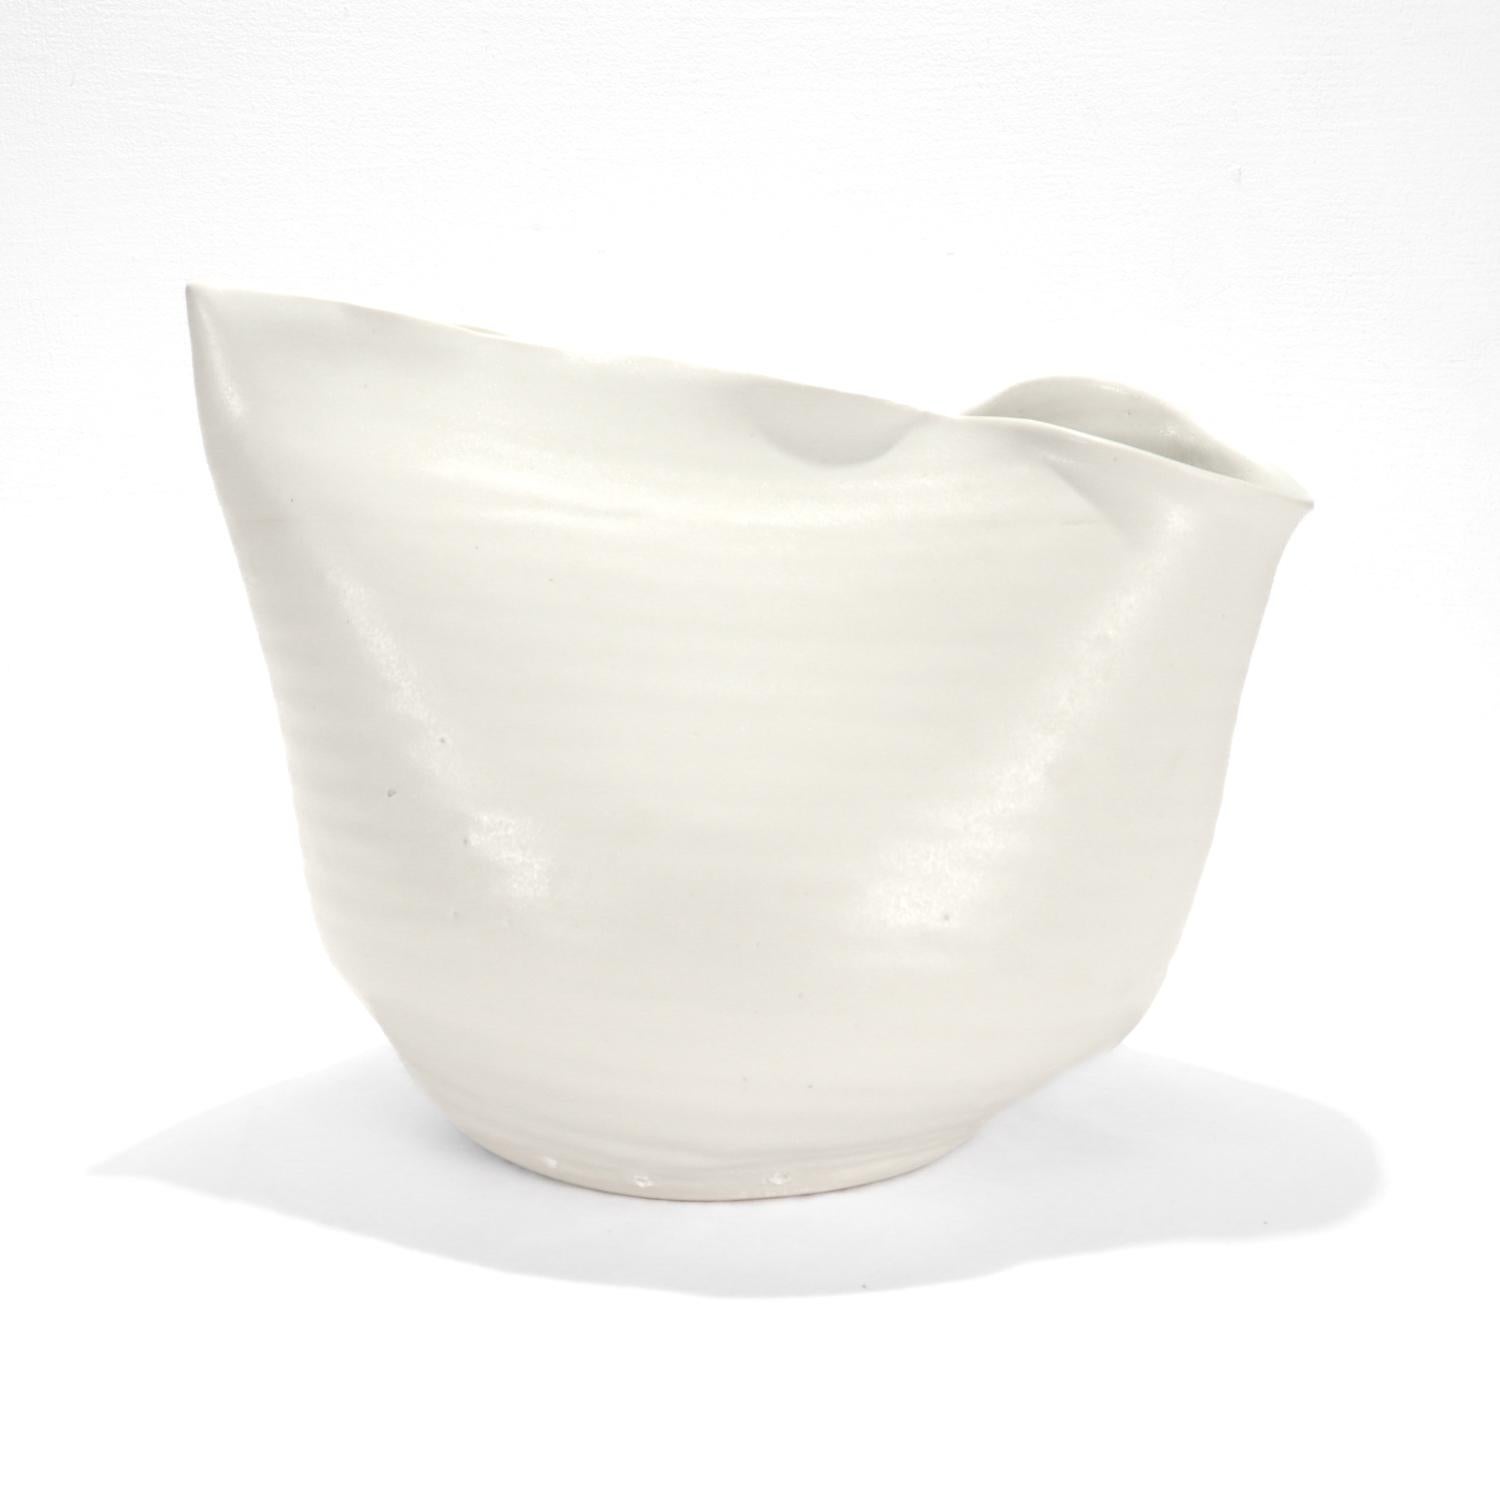 Un fino jarrón de porcelana de edición limitada.

Por Donna Karan para Porcelana Lenox.

Titulado: 